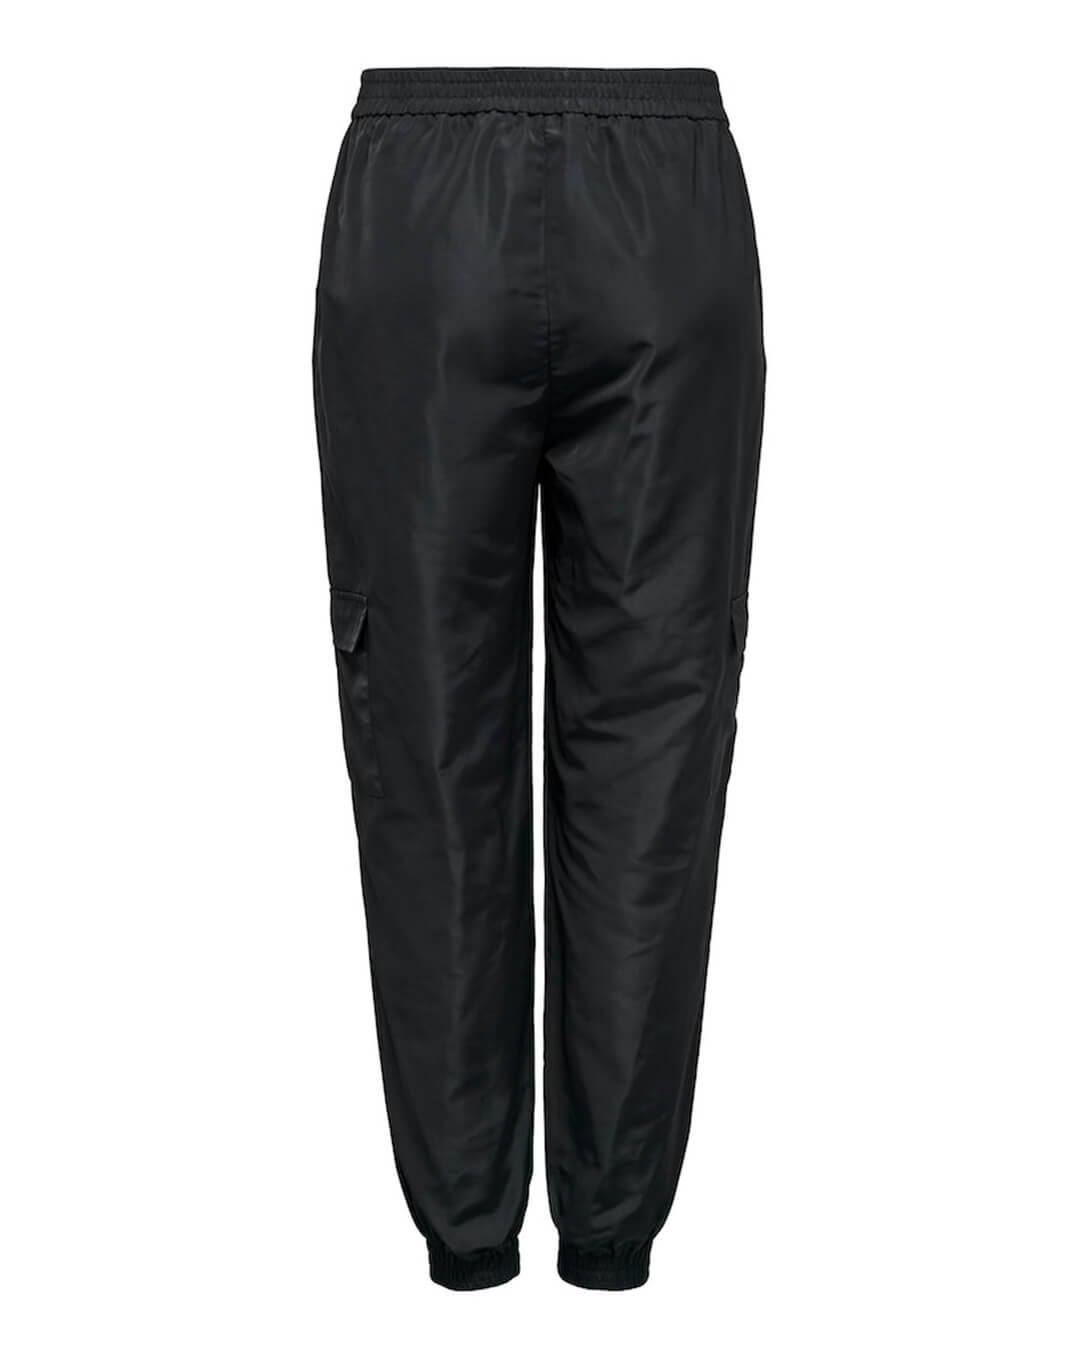 Only Faduma Black Cargo Trousers - Bortex Fine Tailoring